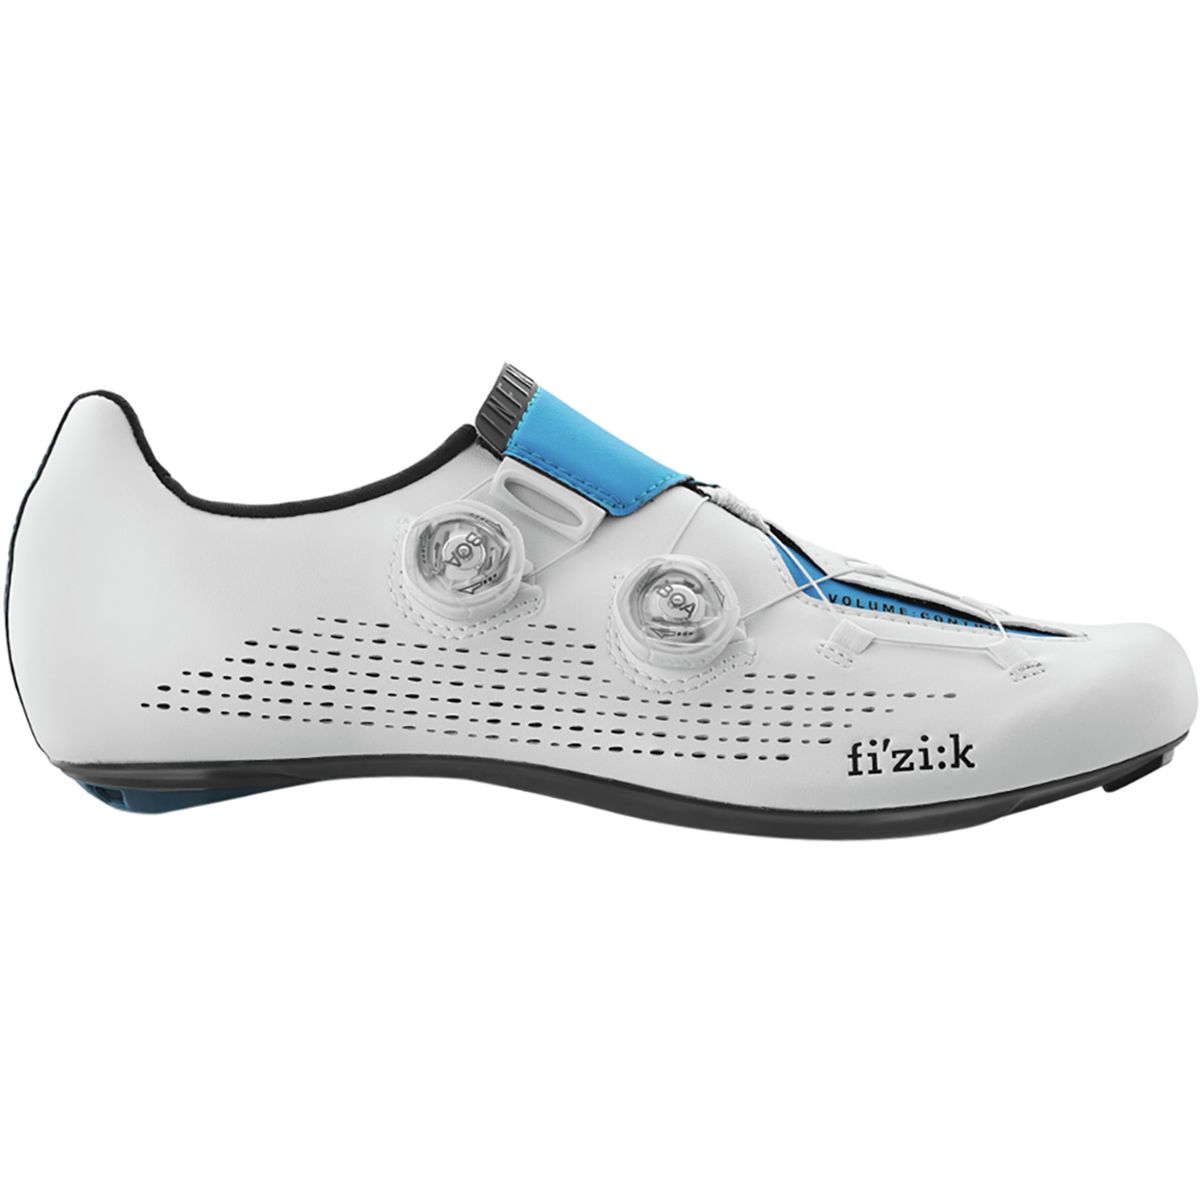 Fi'zi:k R1 Infinito Movistar Limited Edition Cycling Shoe